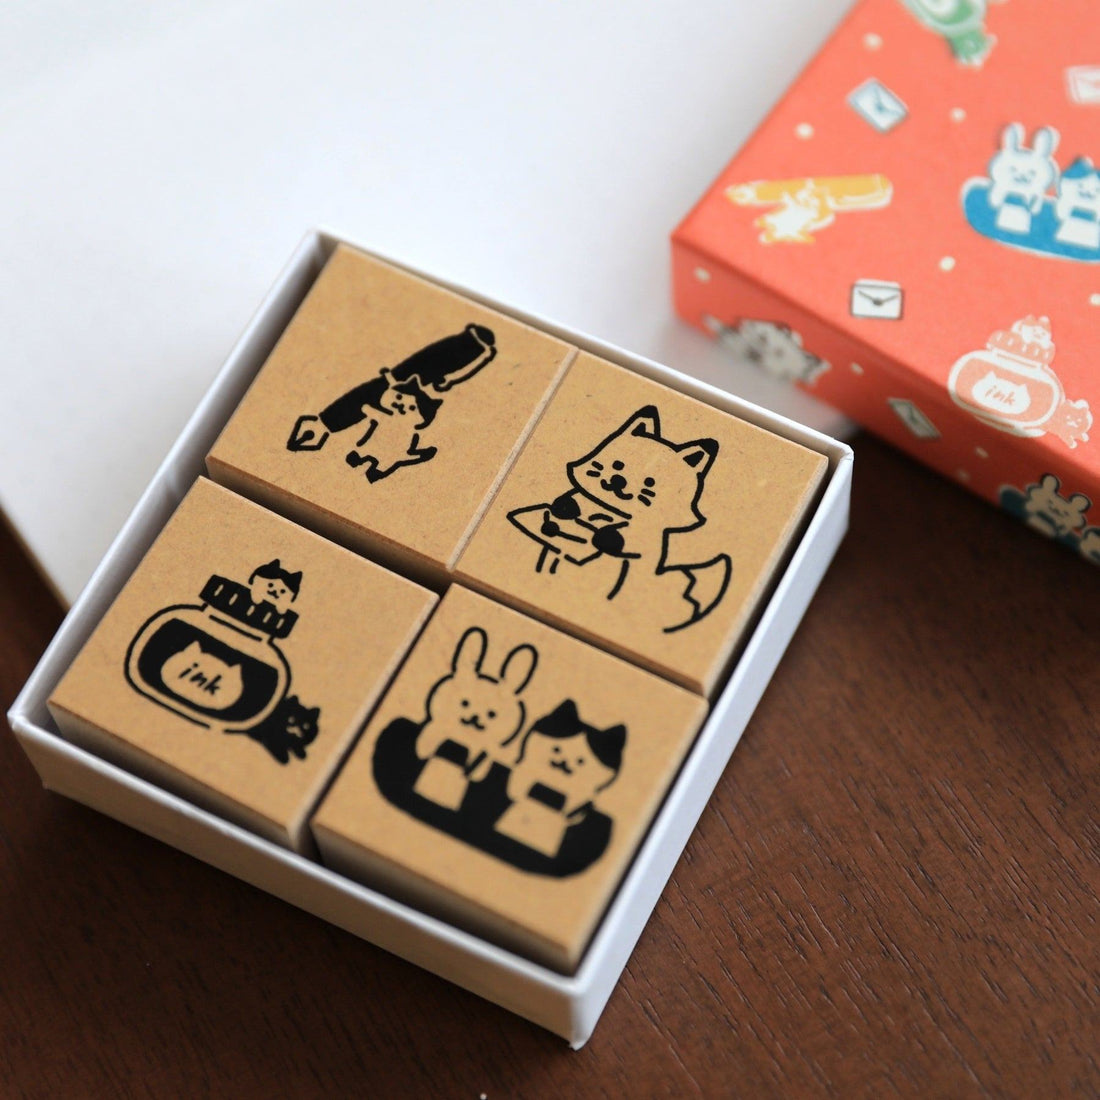 CTFJ Rubber Stamp Box Set - You Got Mail - Techo Treats